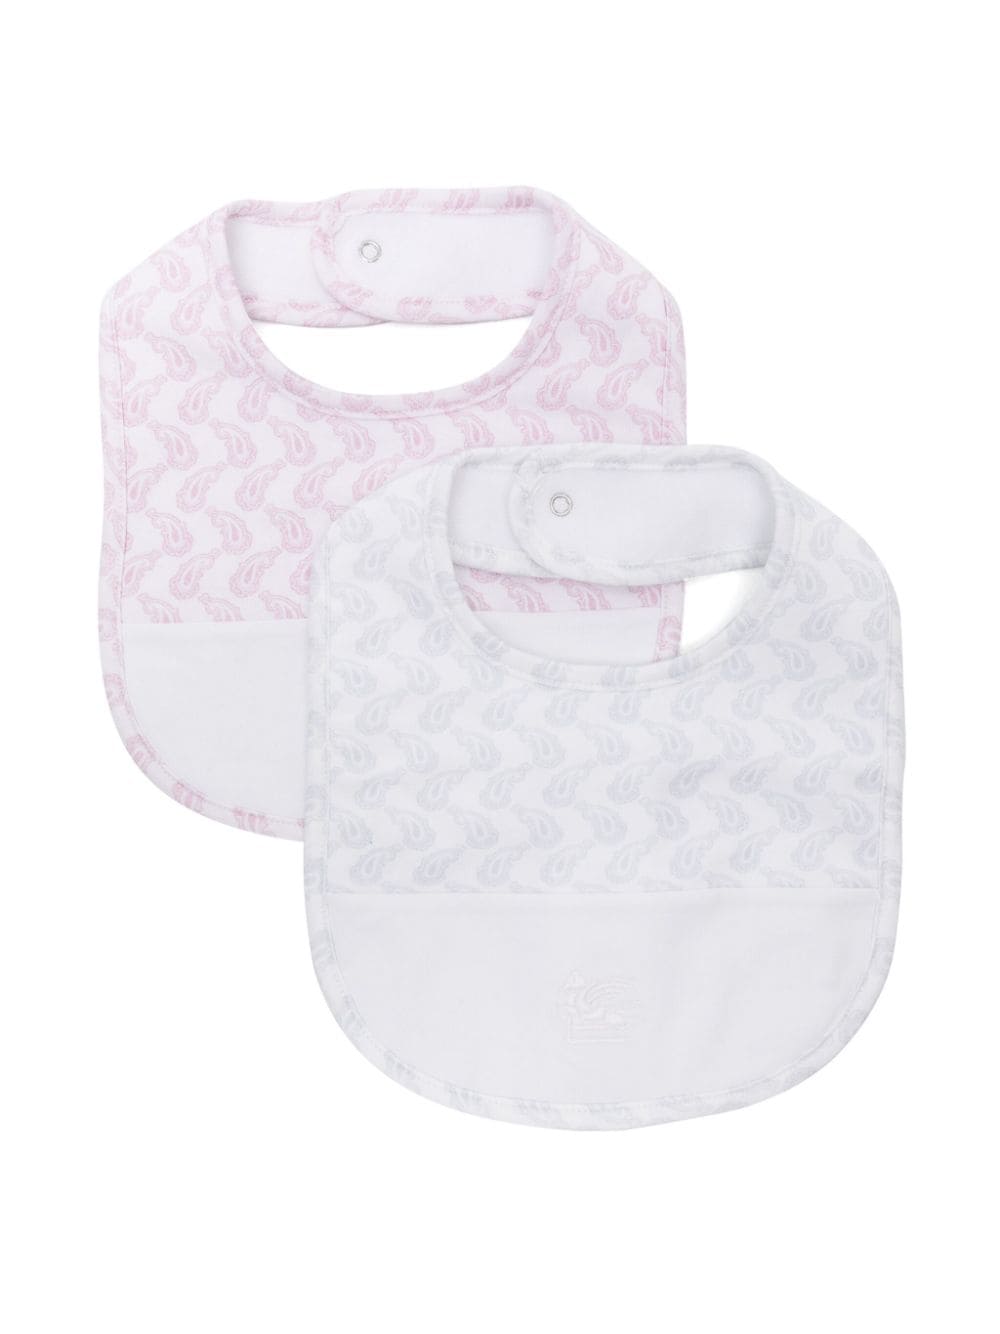 Bavaglini neonato bianchi/rosa